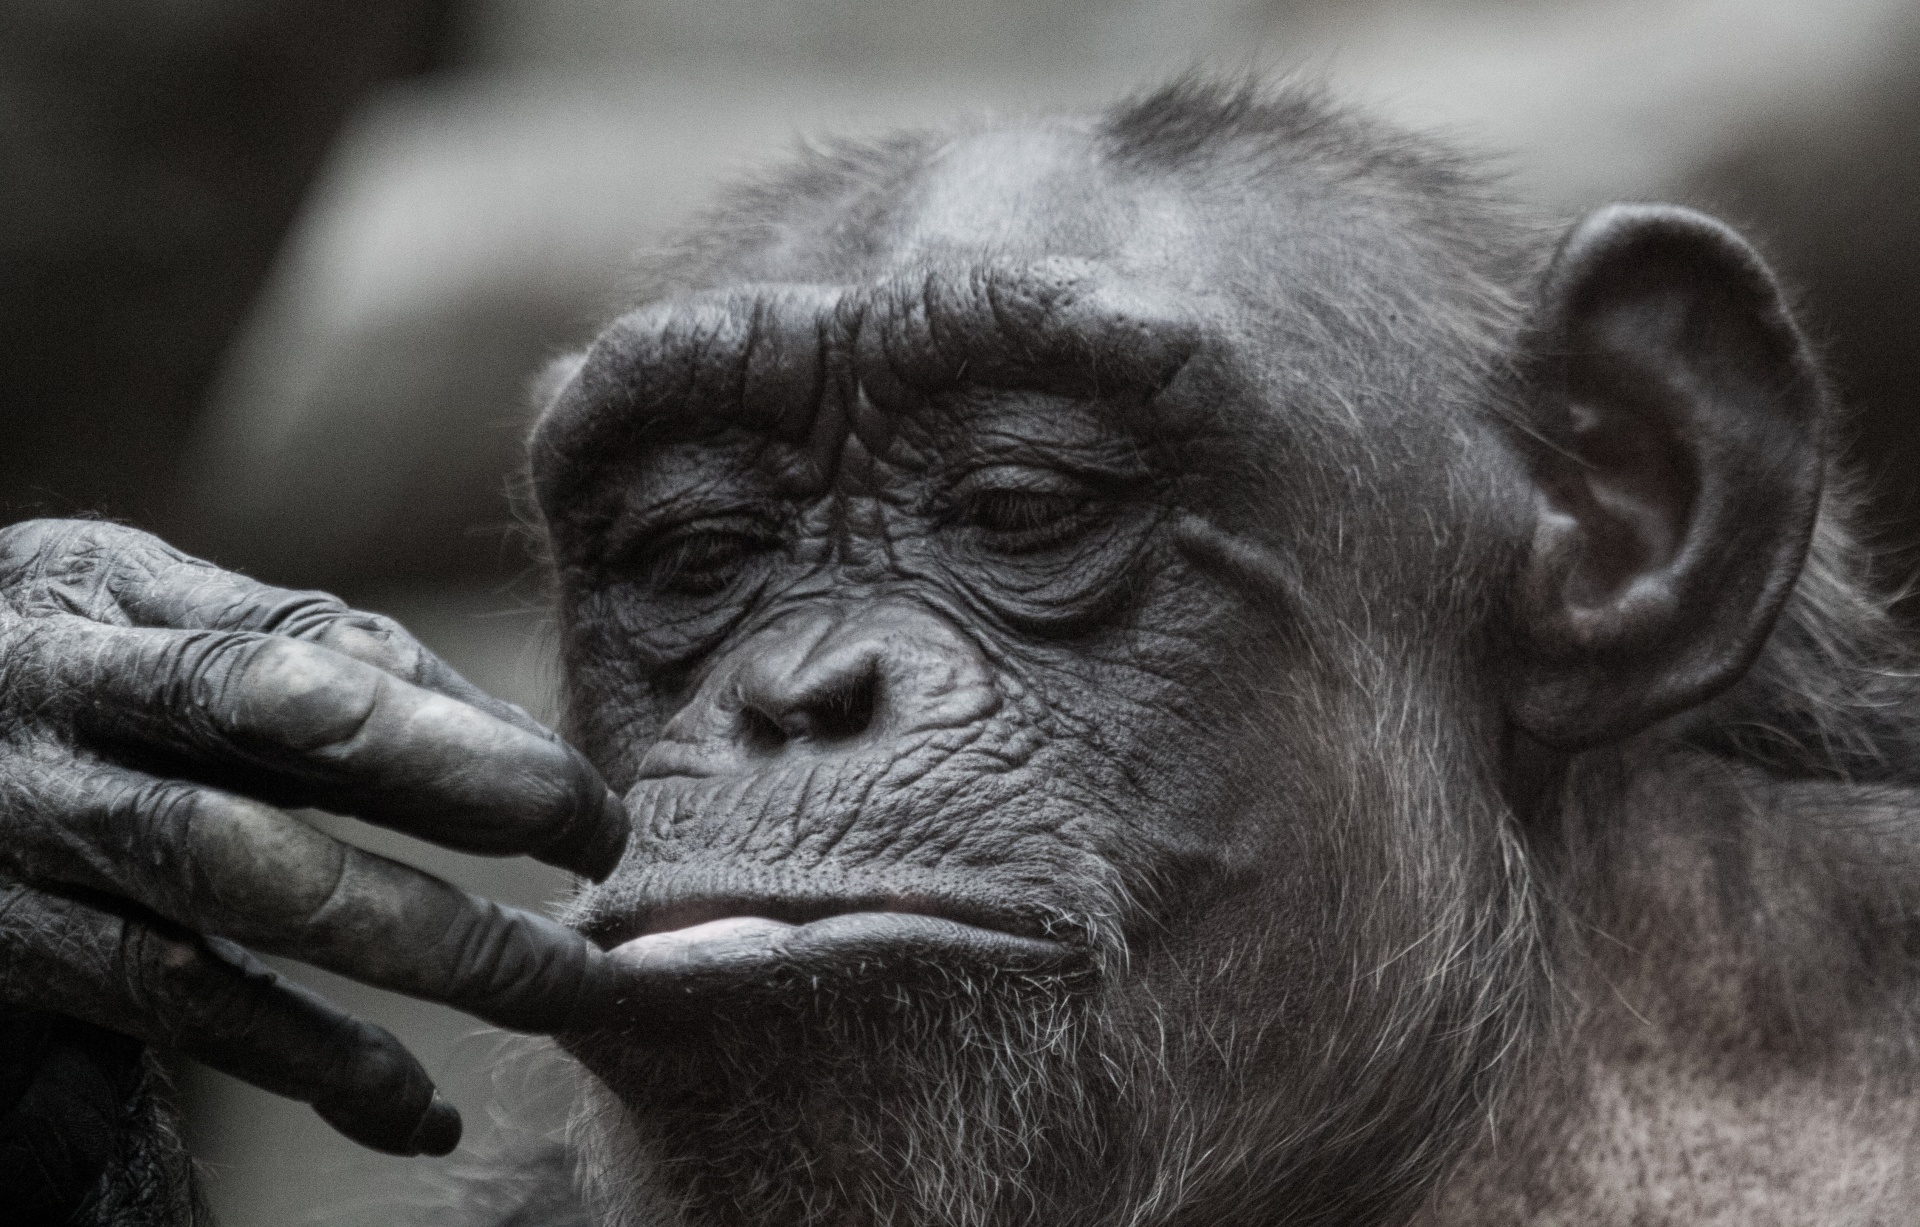 Chimpanzee making a face